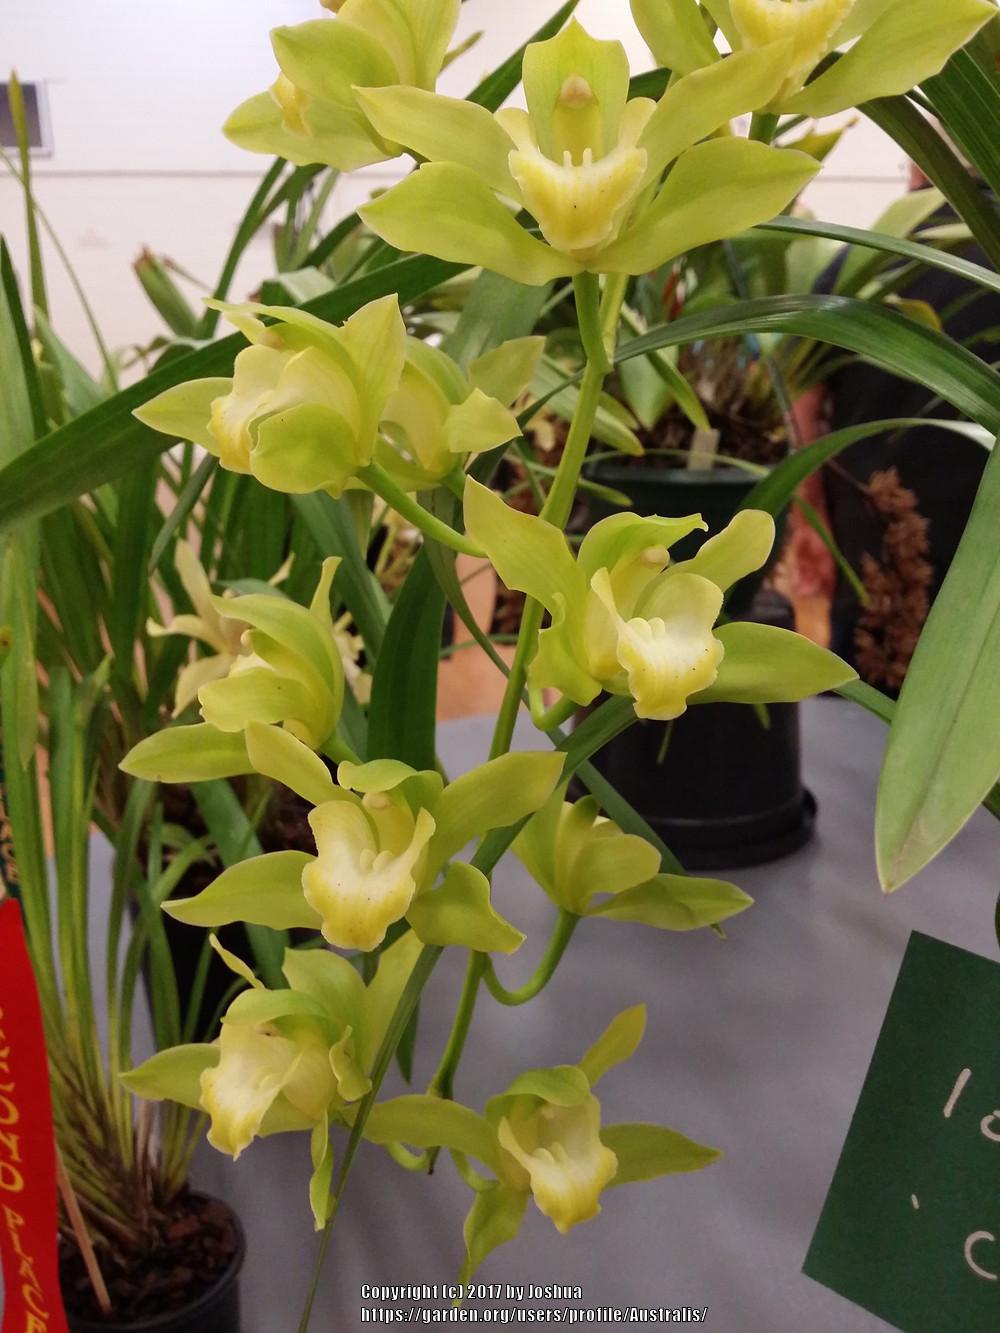 Photo of Orchid (Cymbidium) uploaded by Australis